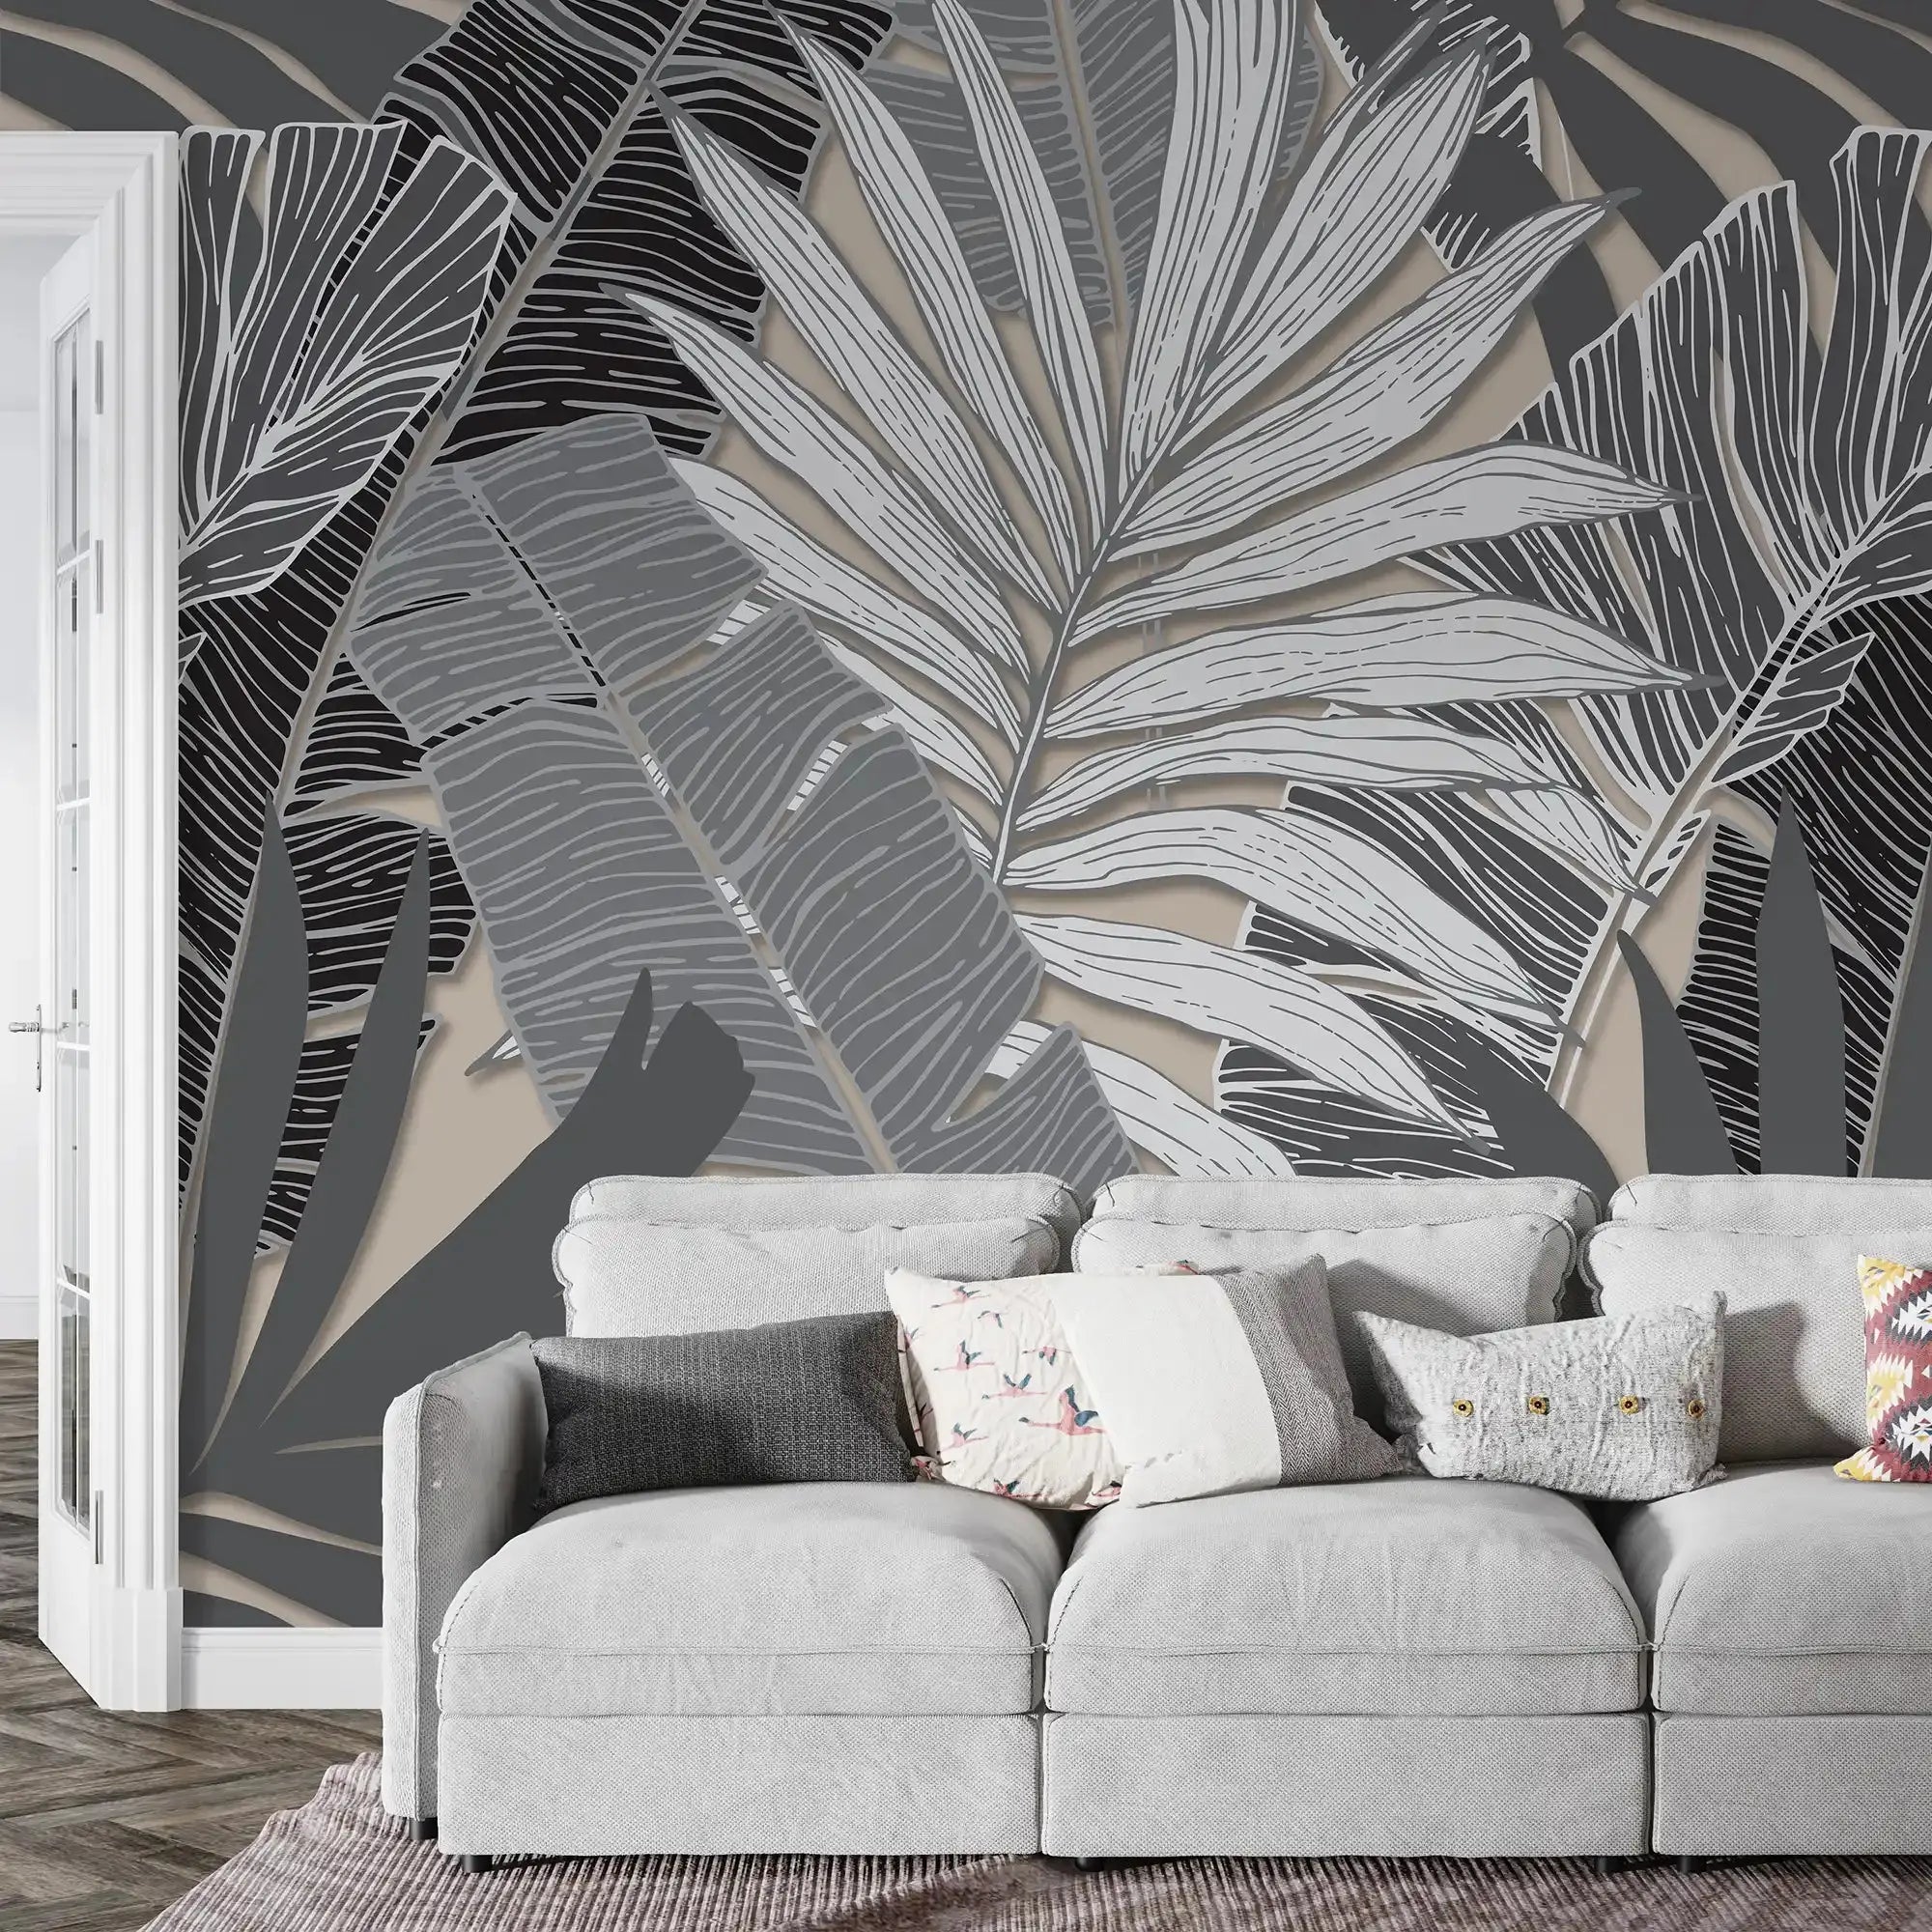 3103-E / Botanical Wall Mural - Self Adhesive, Palm Leaf Tropical Wallpaper for Any Room - Artevella